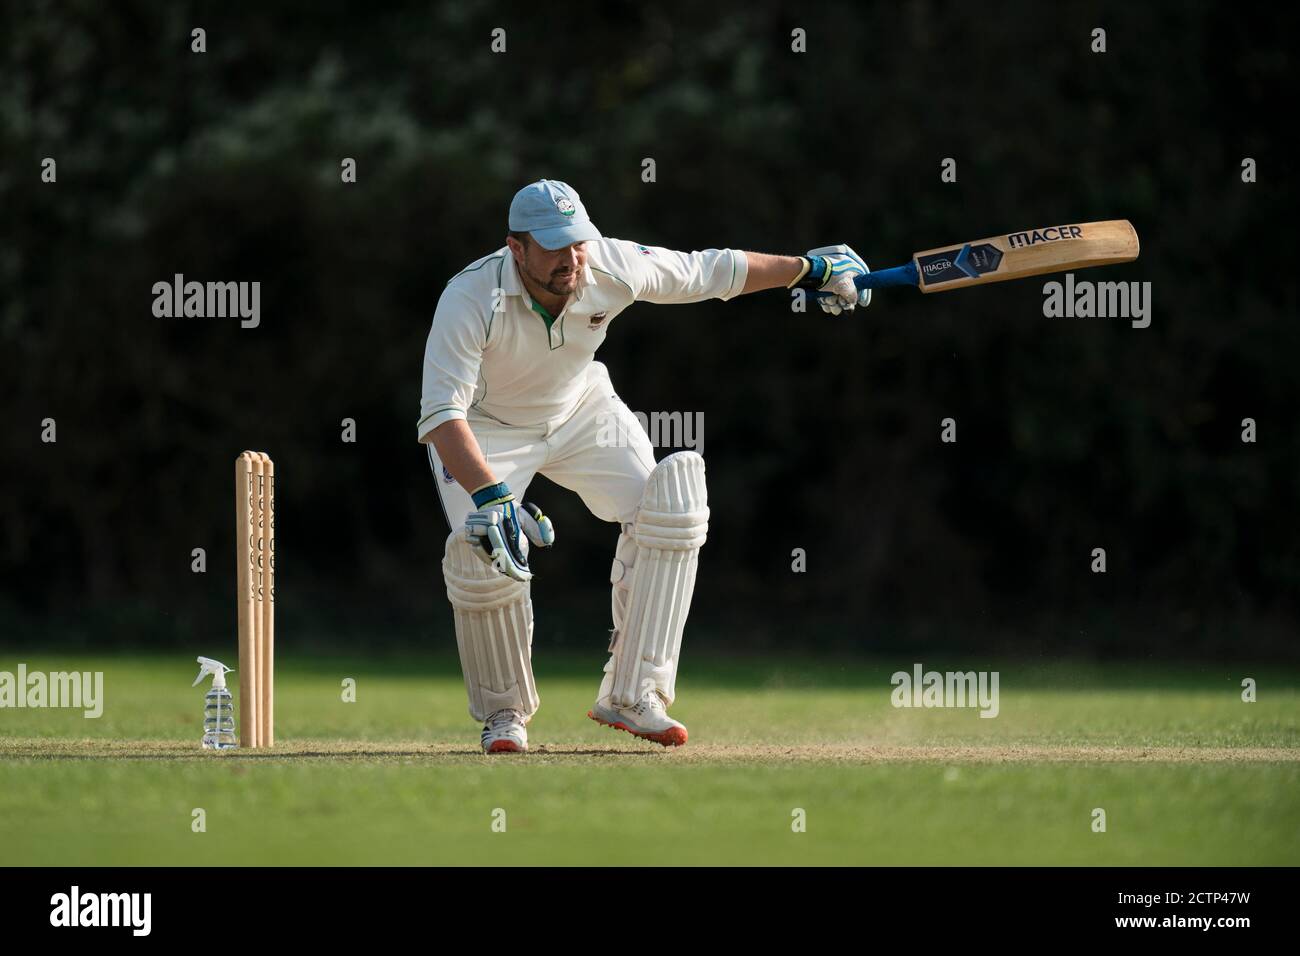 Batsman playing shot Stock Photo